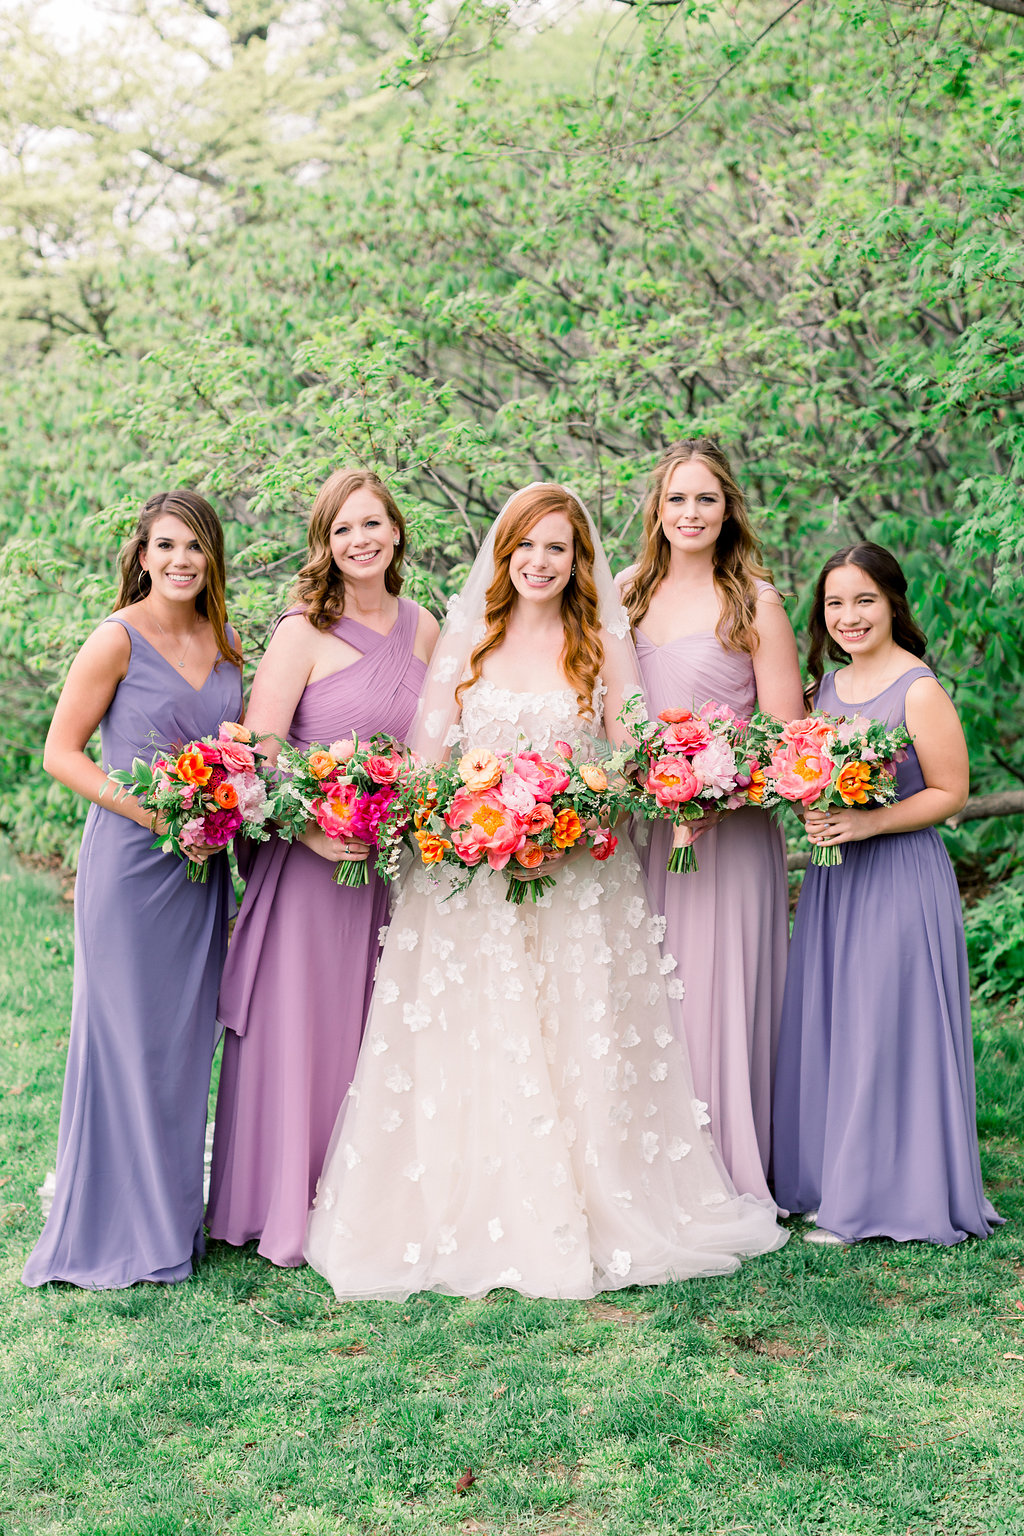 Weddings - Joyful Color in the Garden — Denise Fasanello Flowers